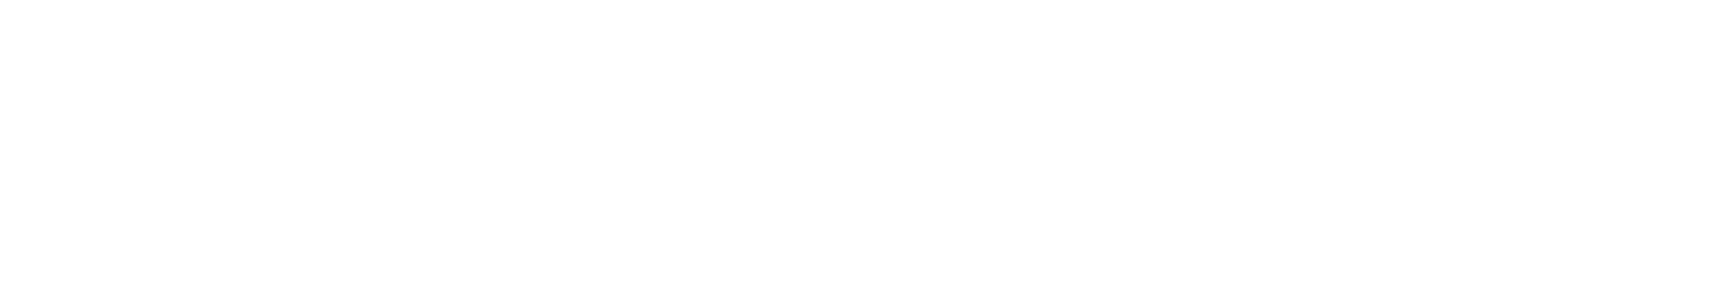 Northern Sydney Vascular Logo, reverse in white